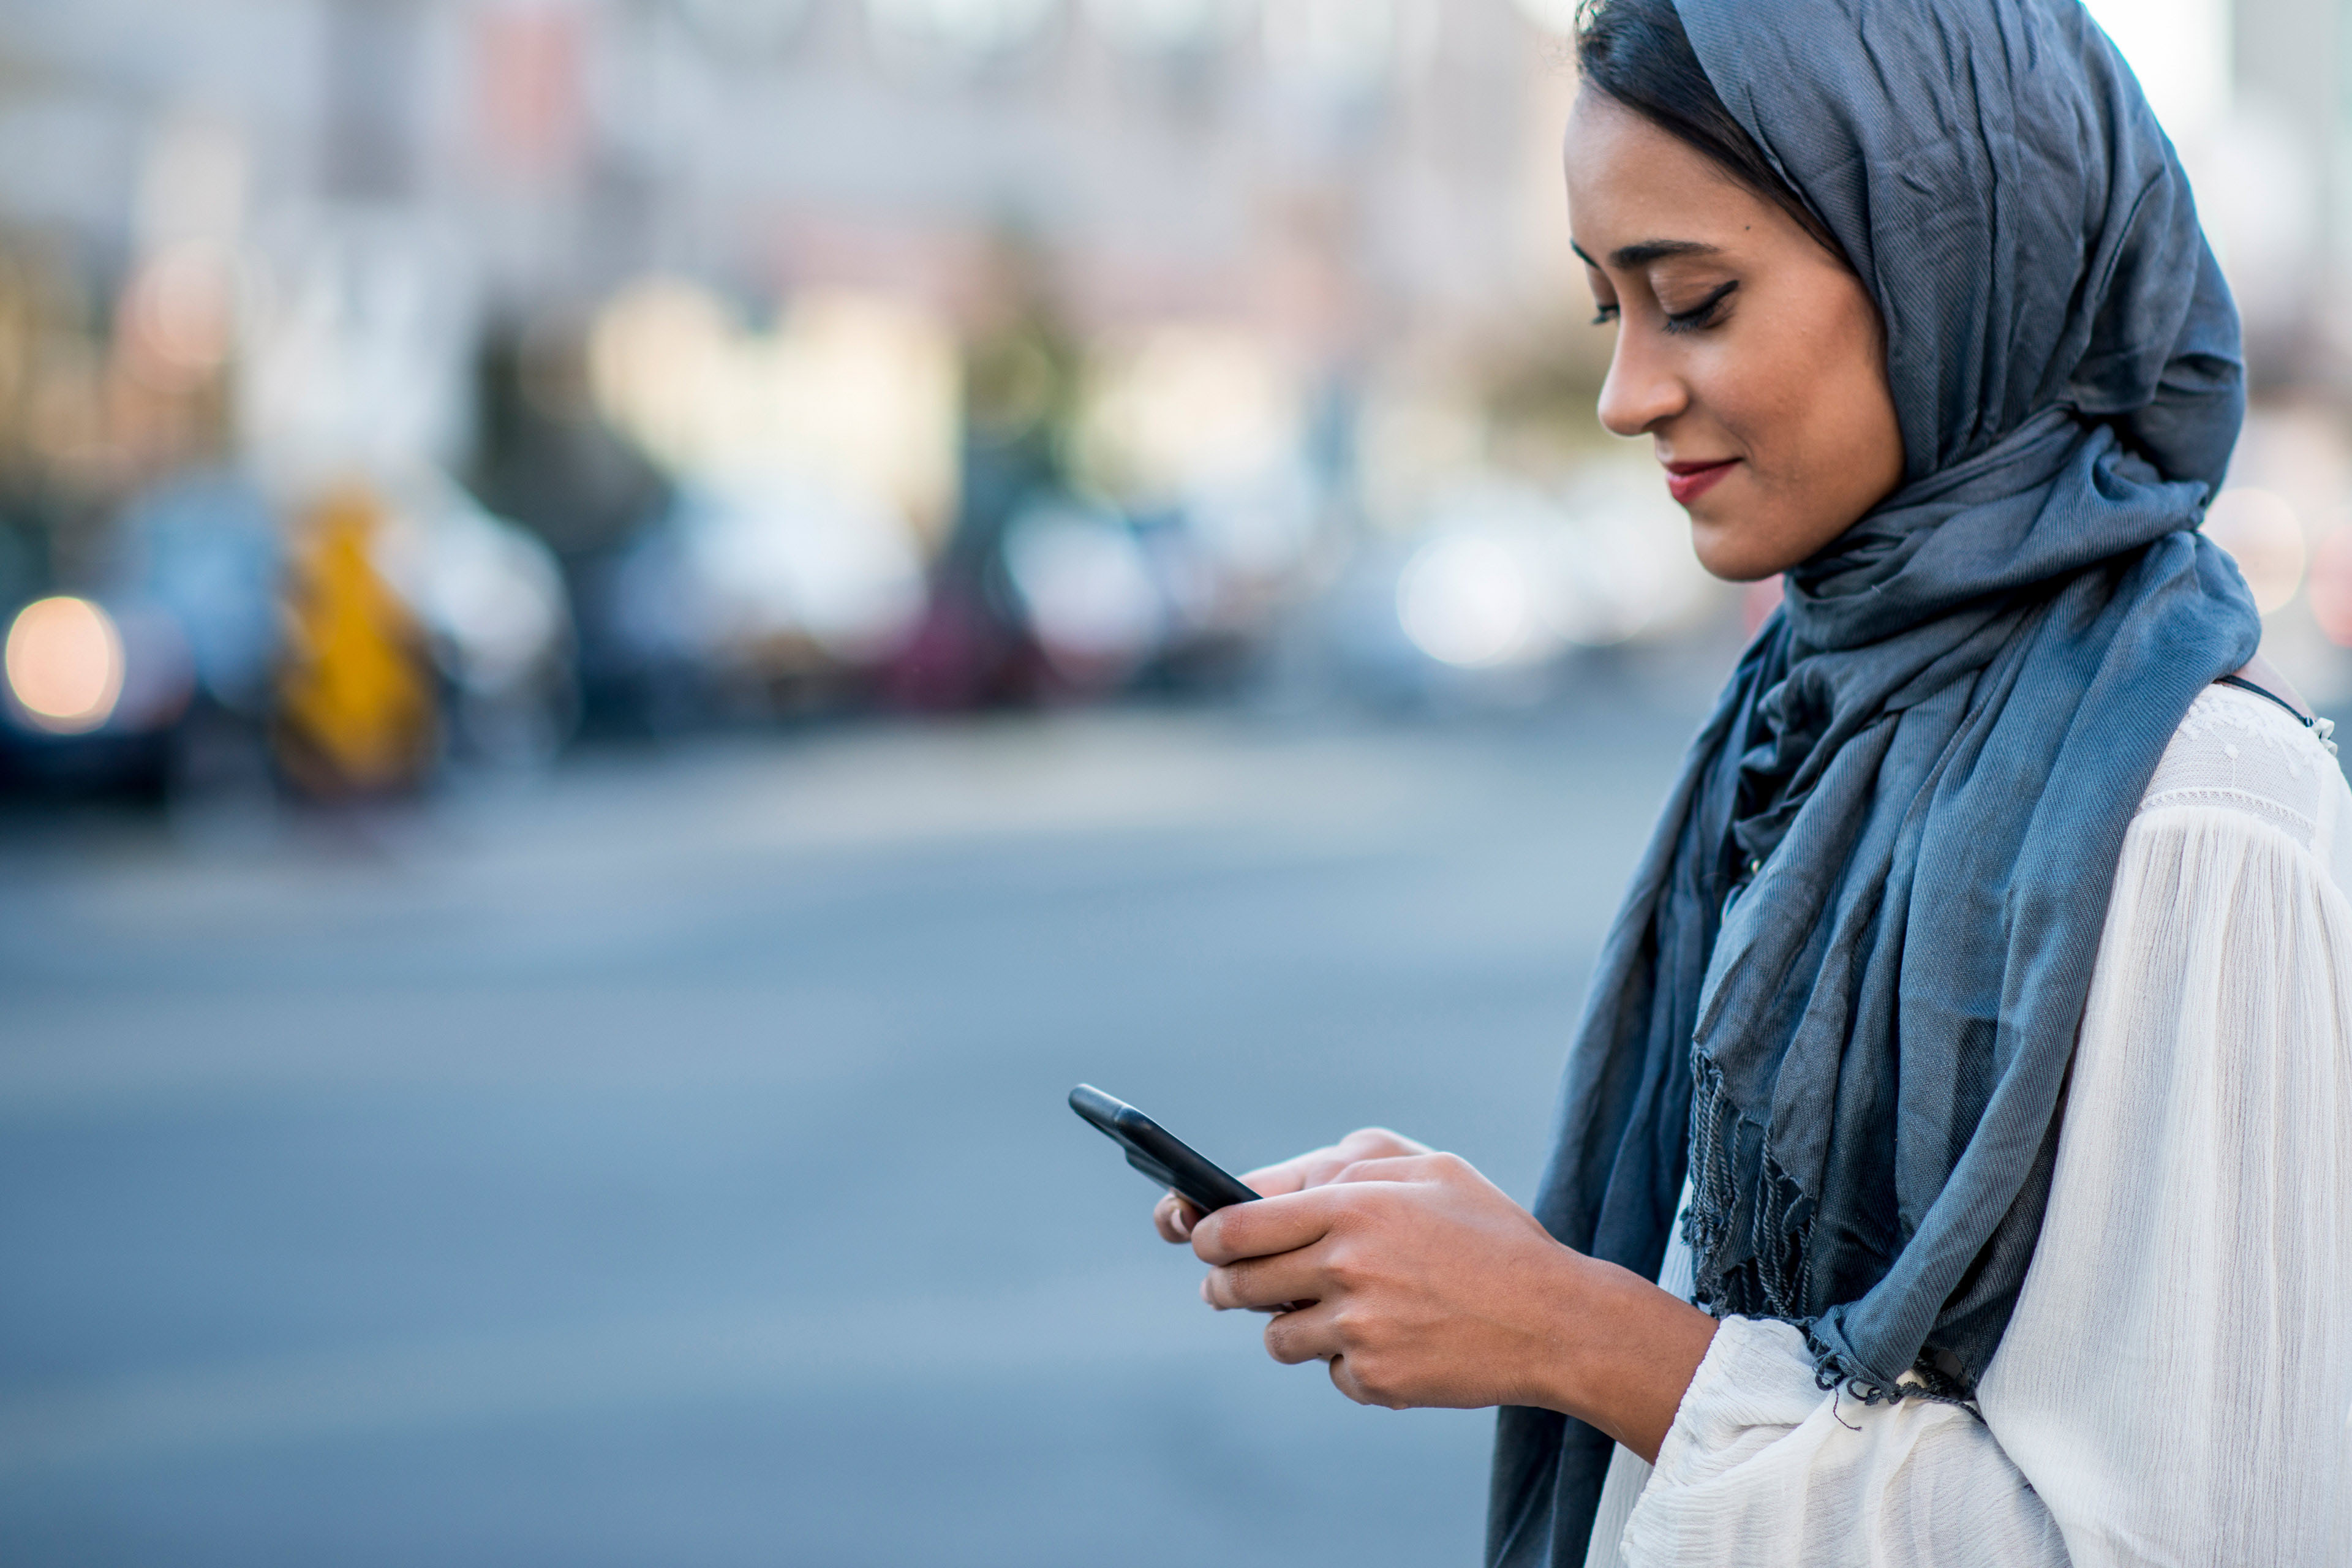 Woman with headscarf checks smartphone